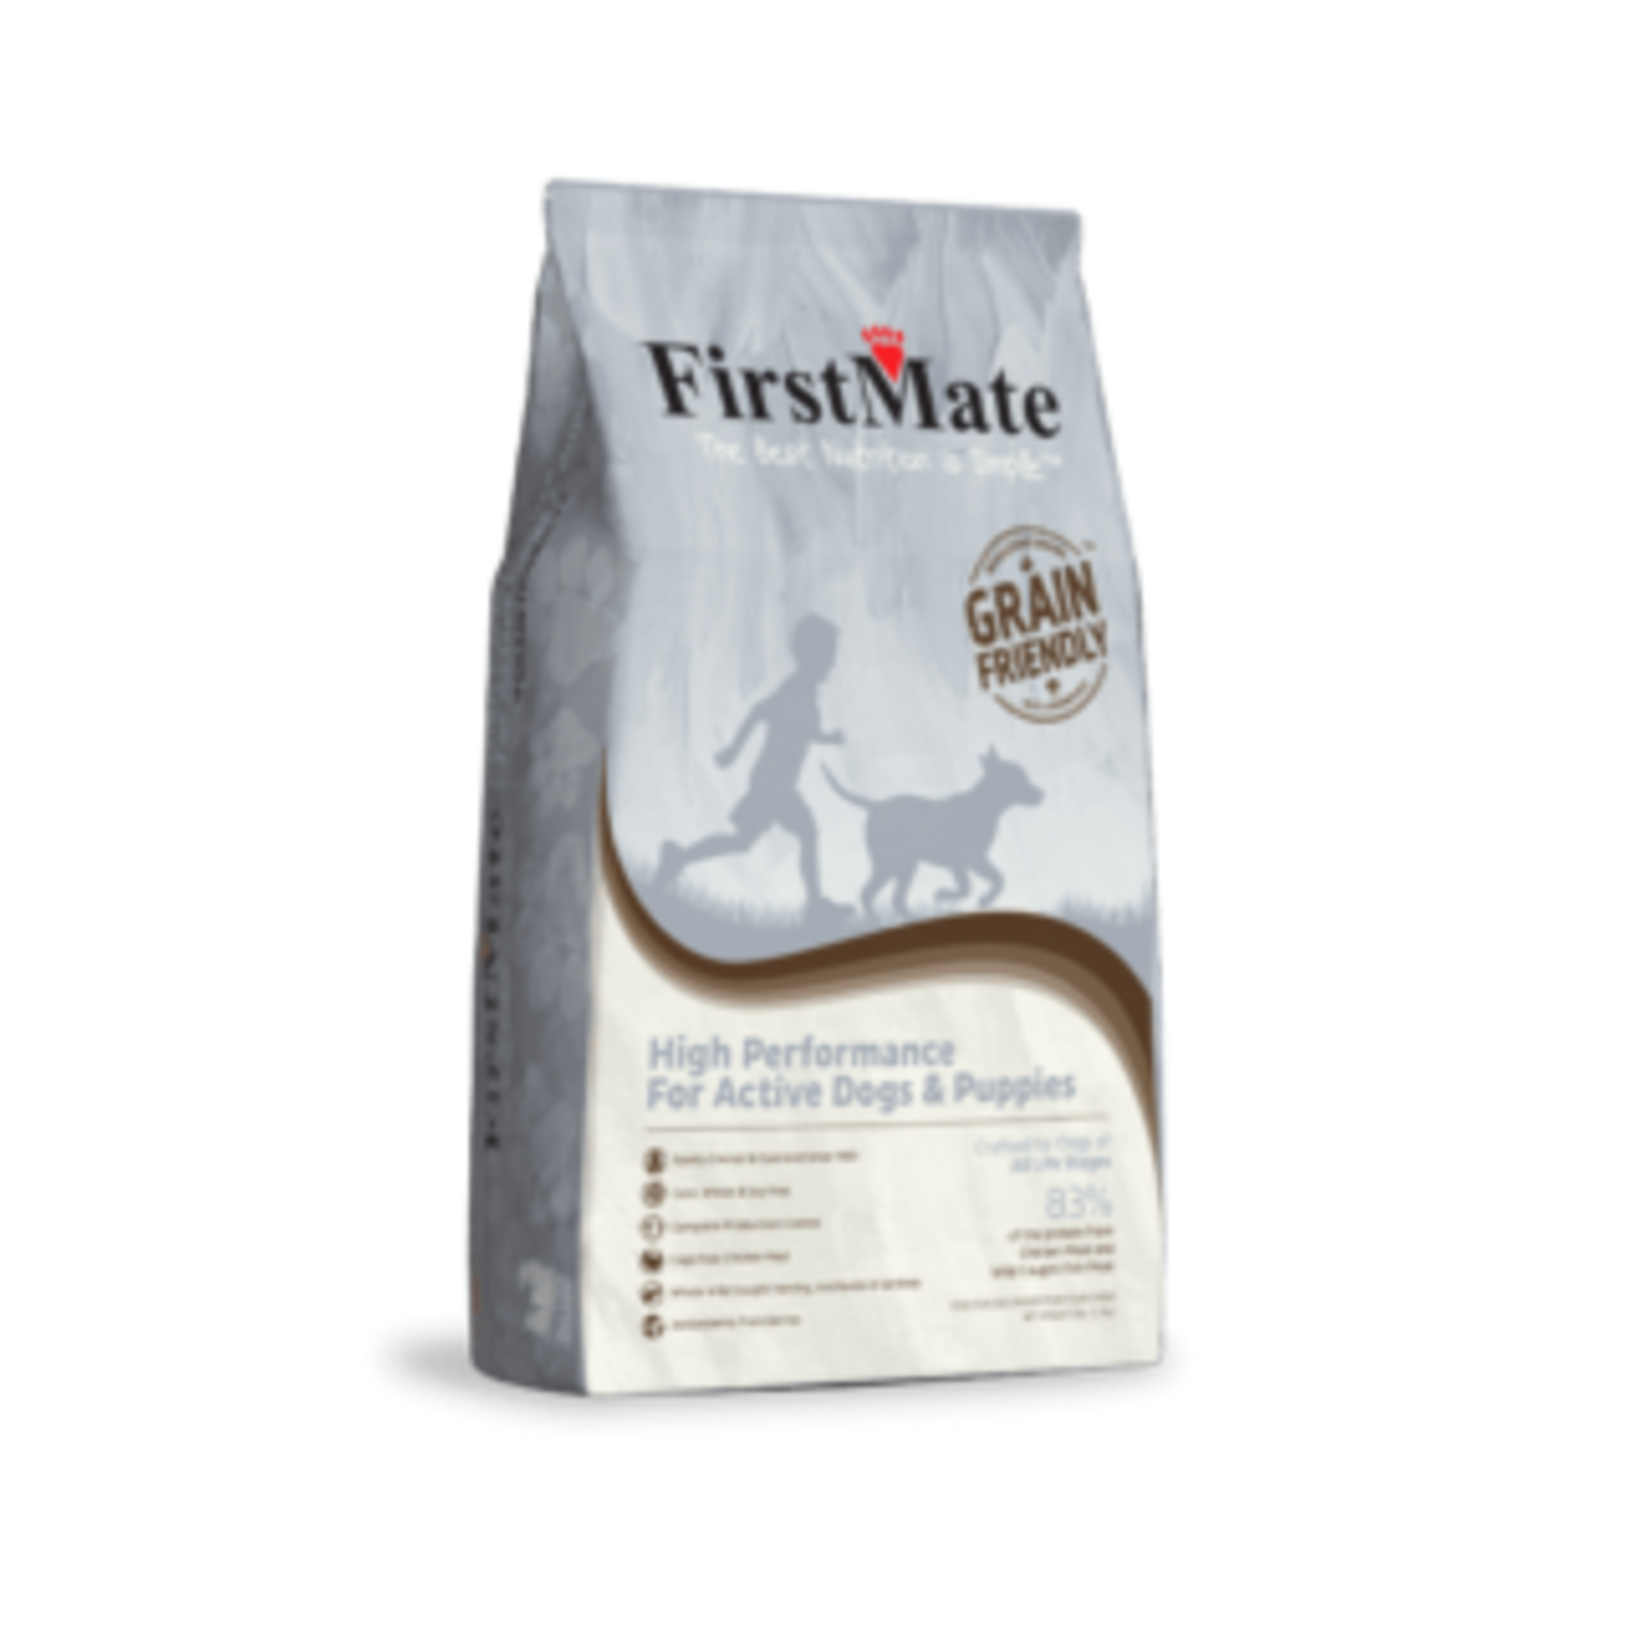 FirstMate FirstMate Dog Grain Friendly High Performance Puppy 25lb